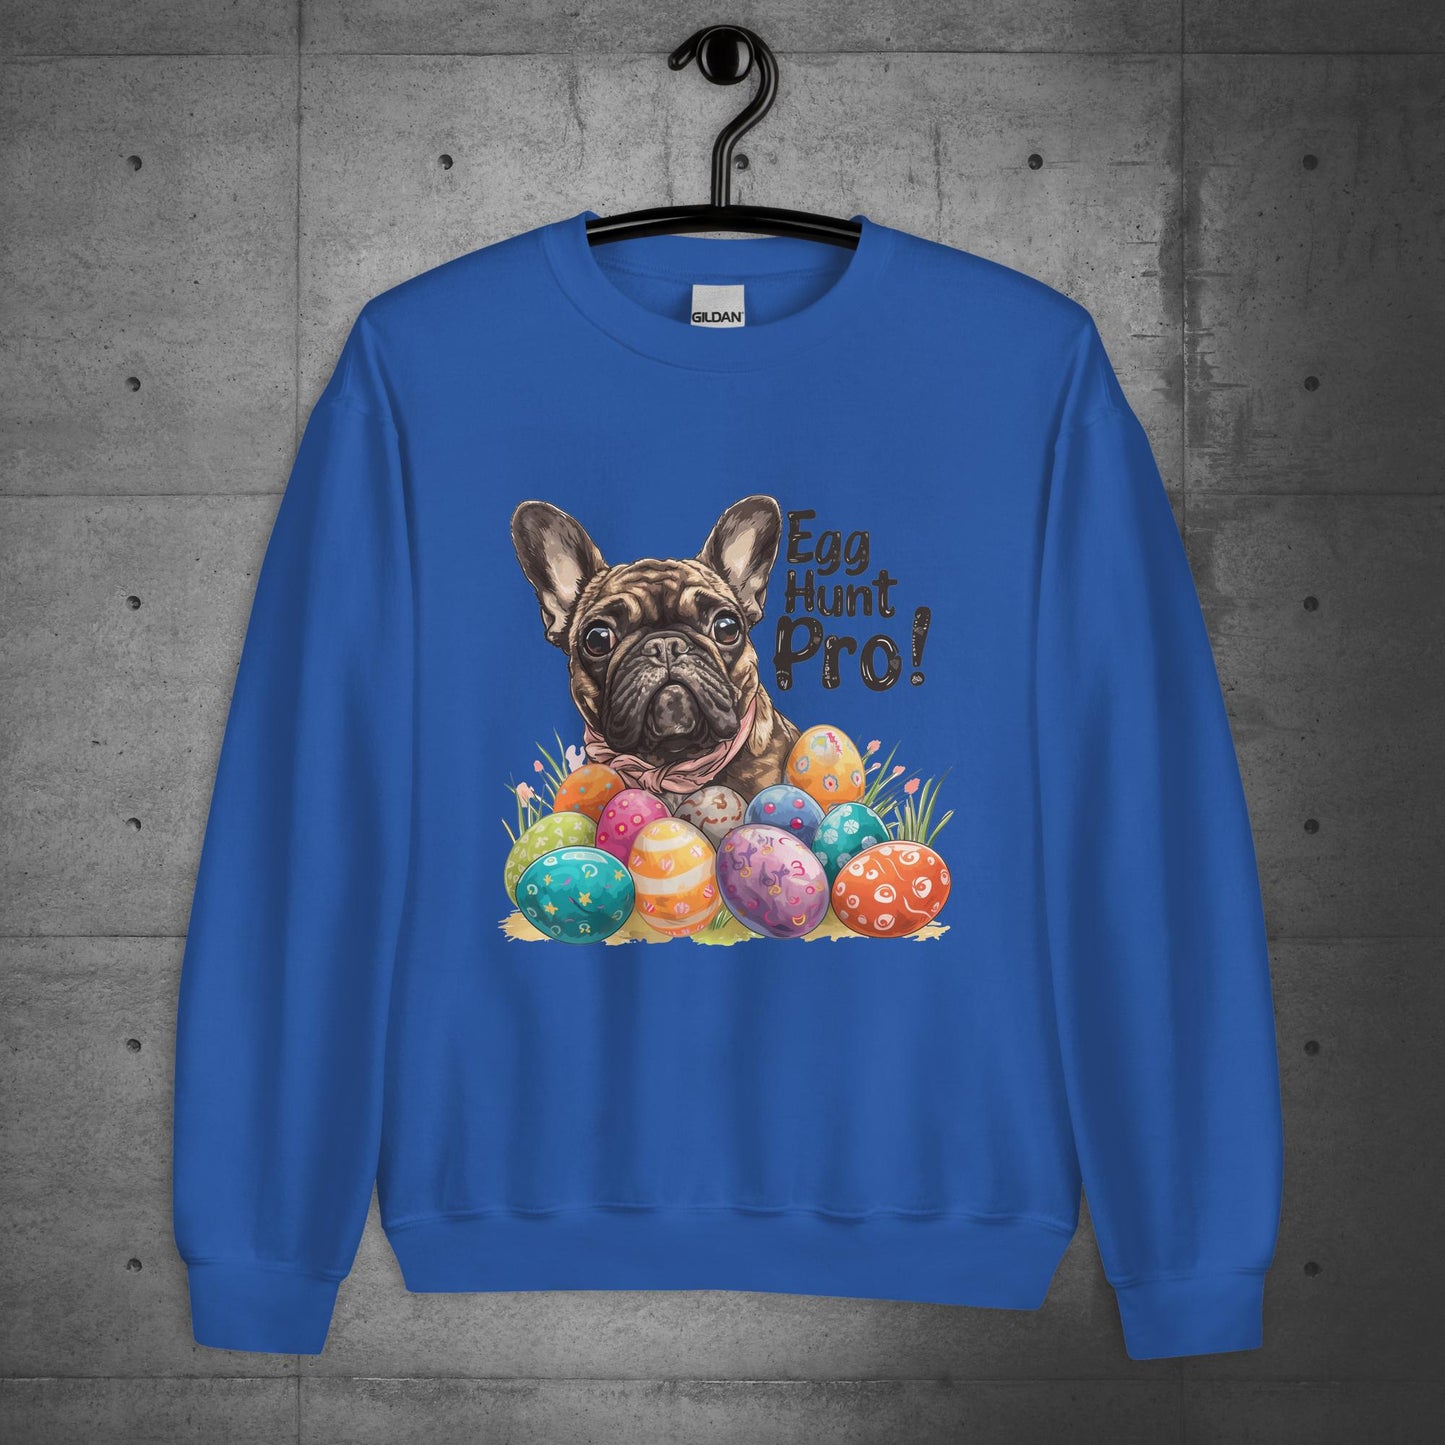 French Bulldog "Egg Hunt Pro !" - Unisex Sweatshirt